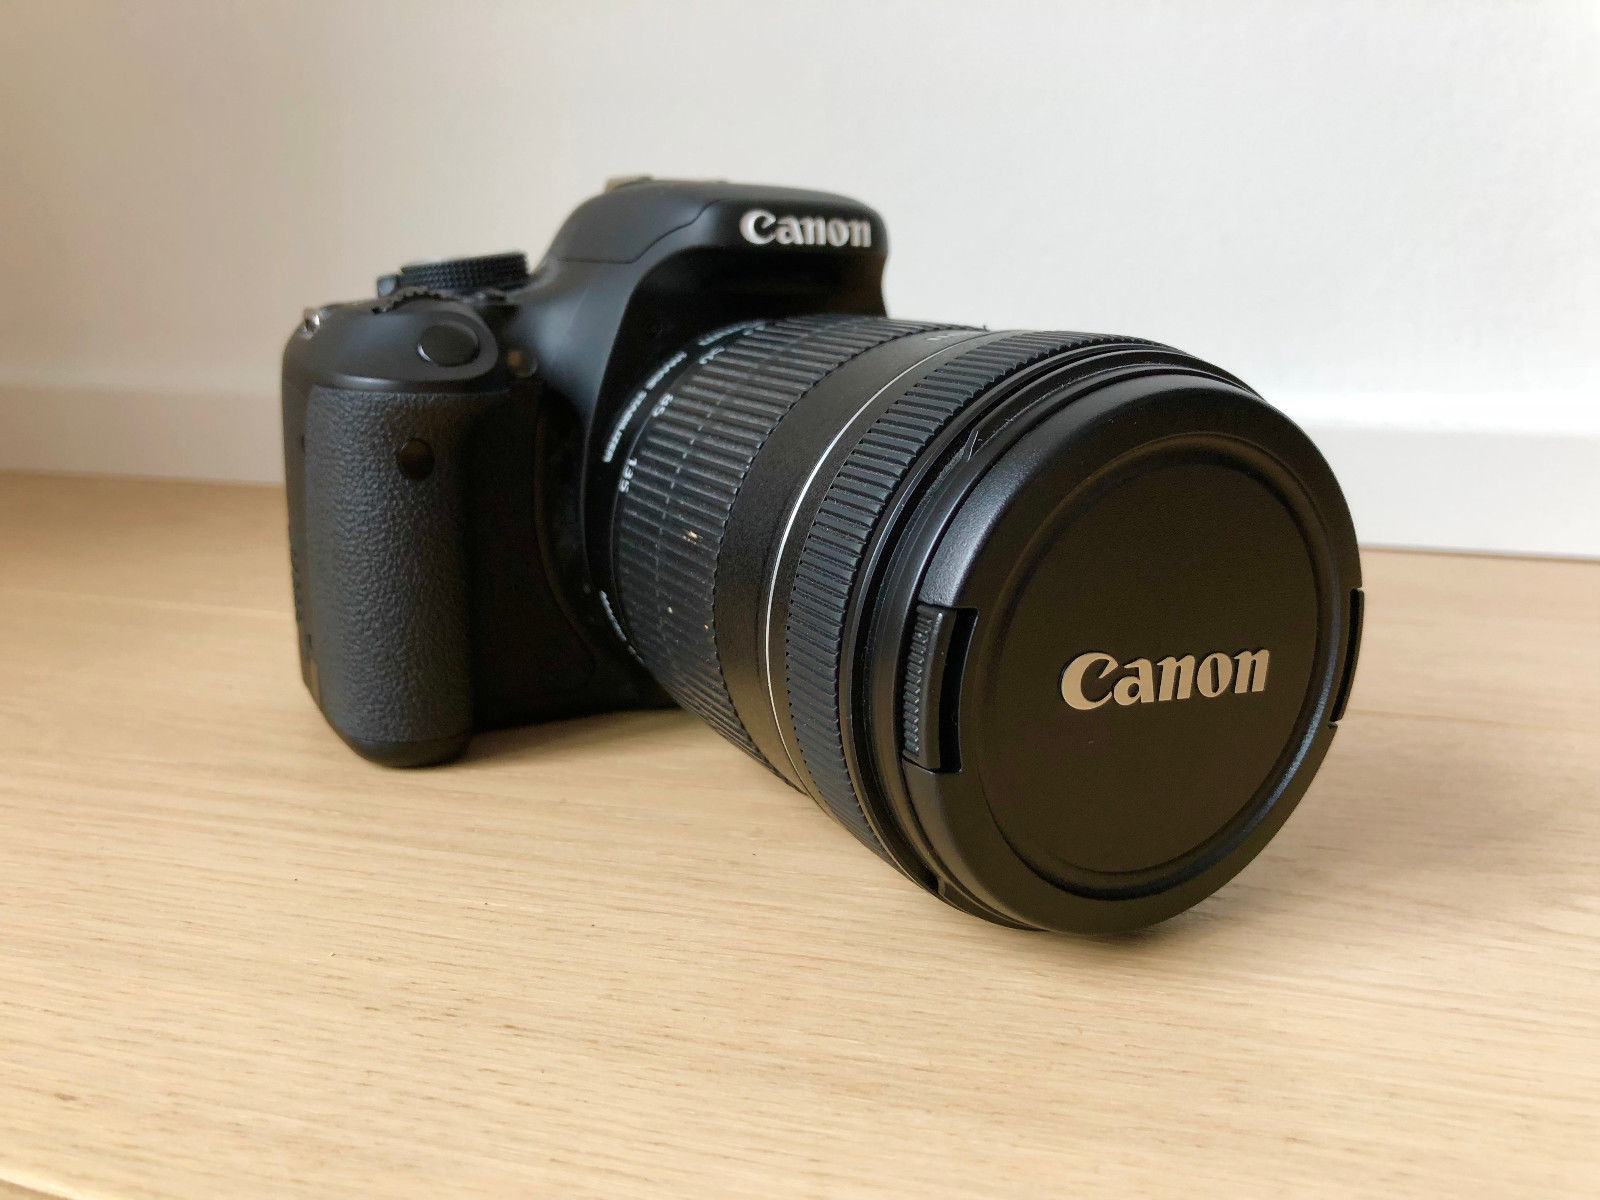 Neuwertige Canon EOS 600D Digitalkamera mit original Canon 18-135mm Objektiv